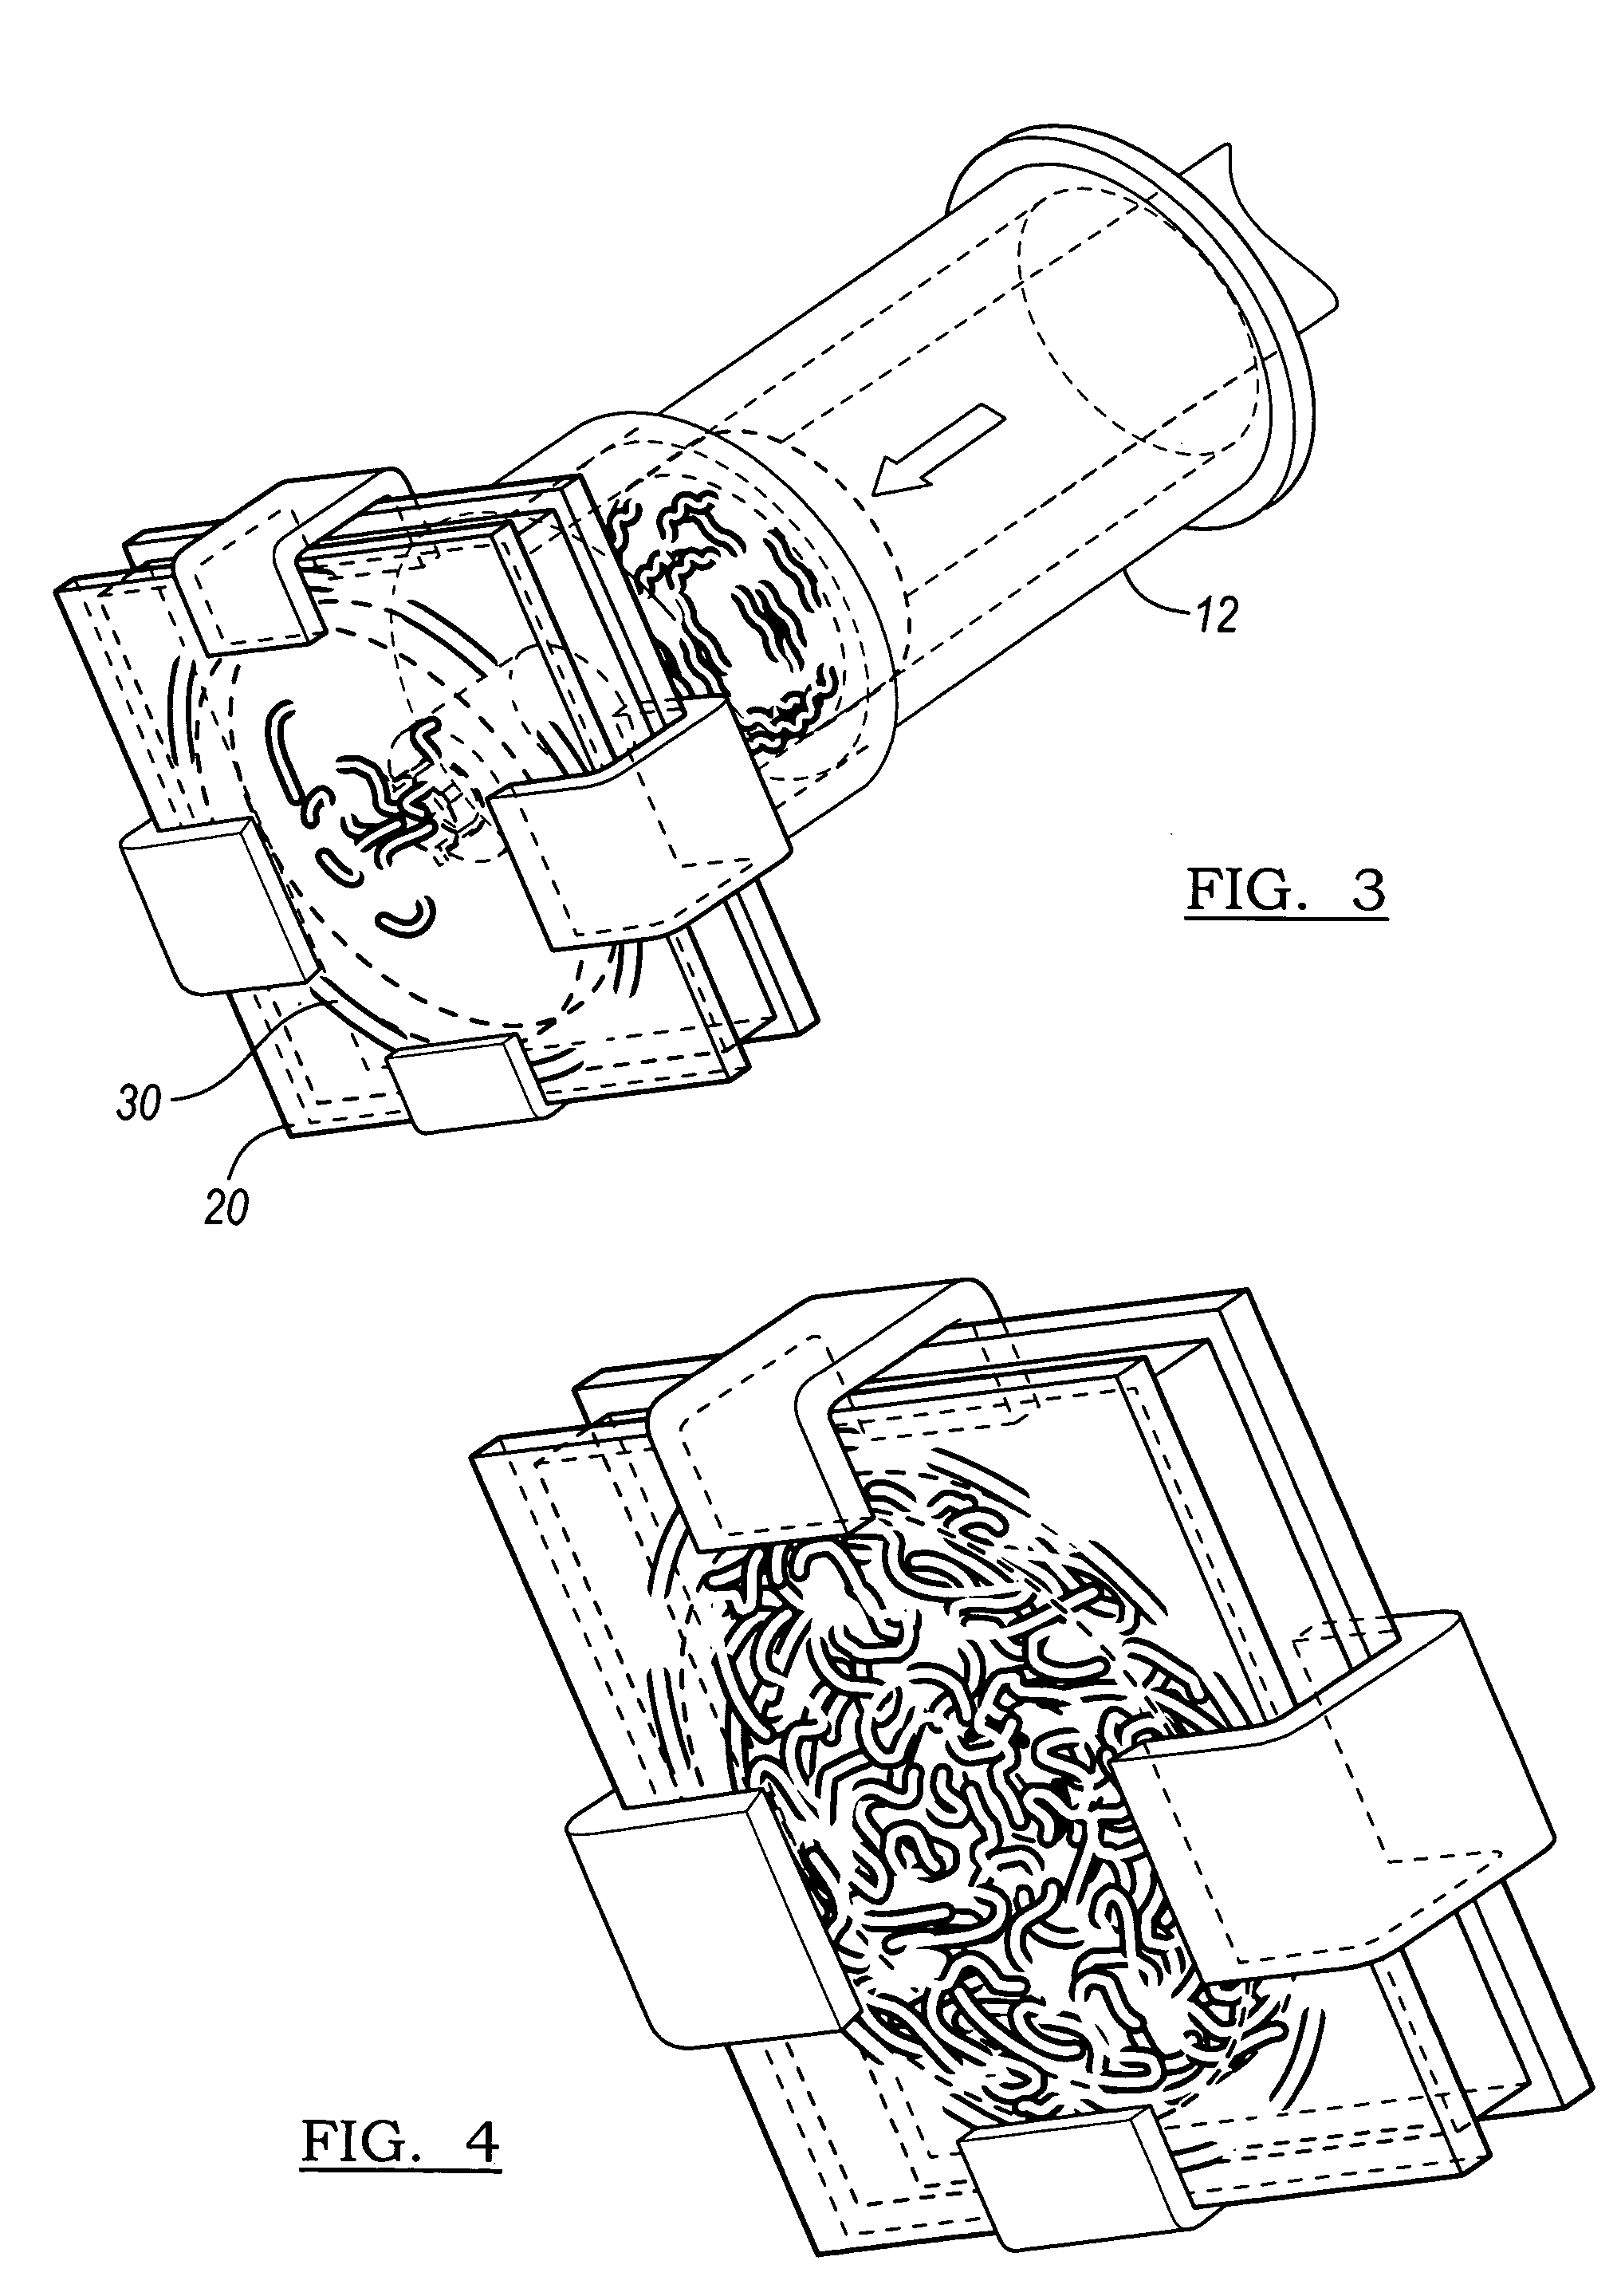 Method and apparatus for preparing bone